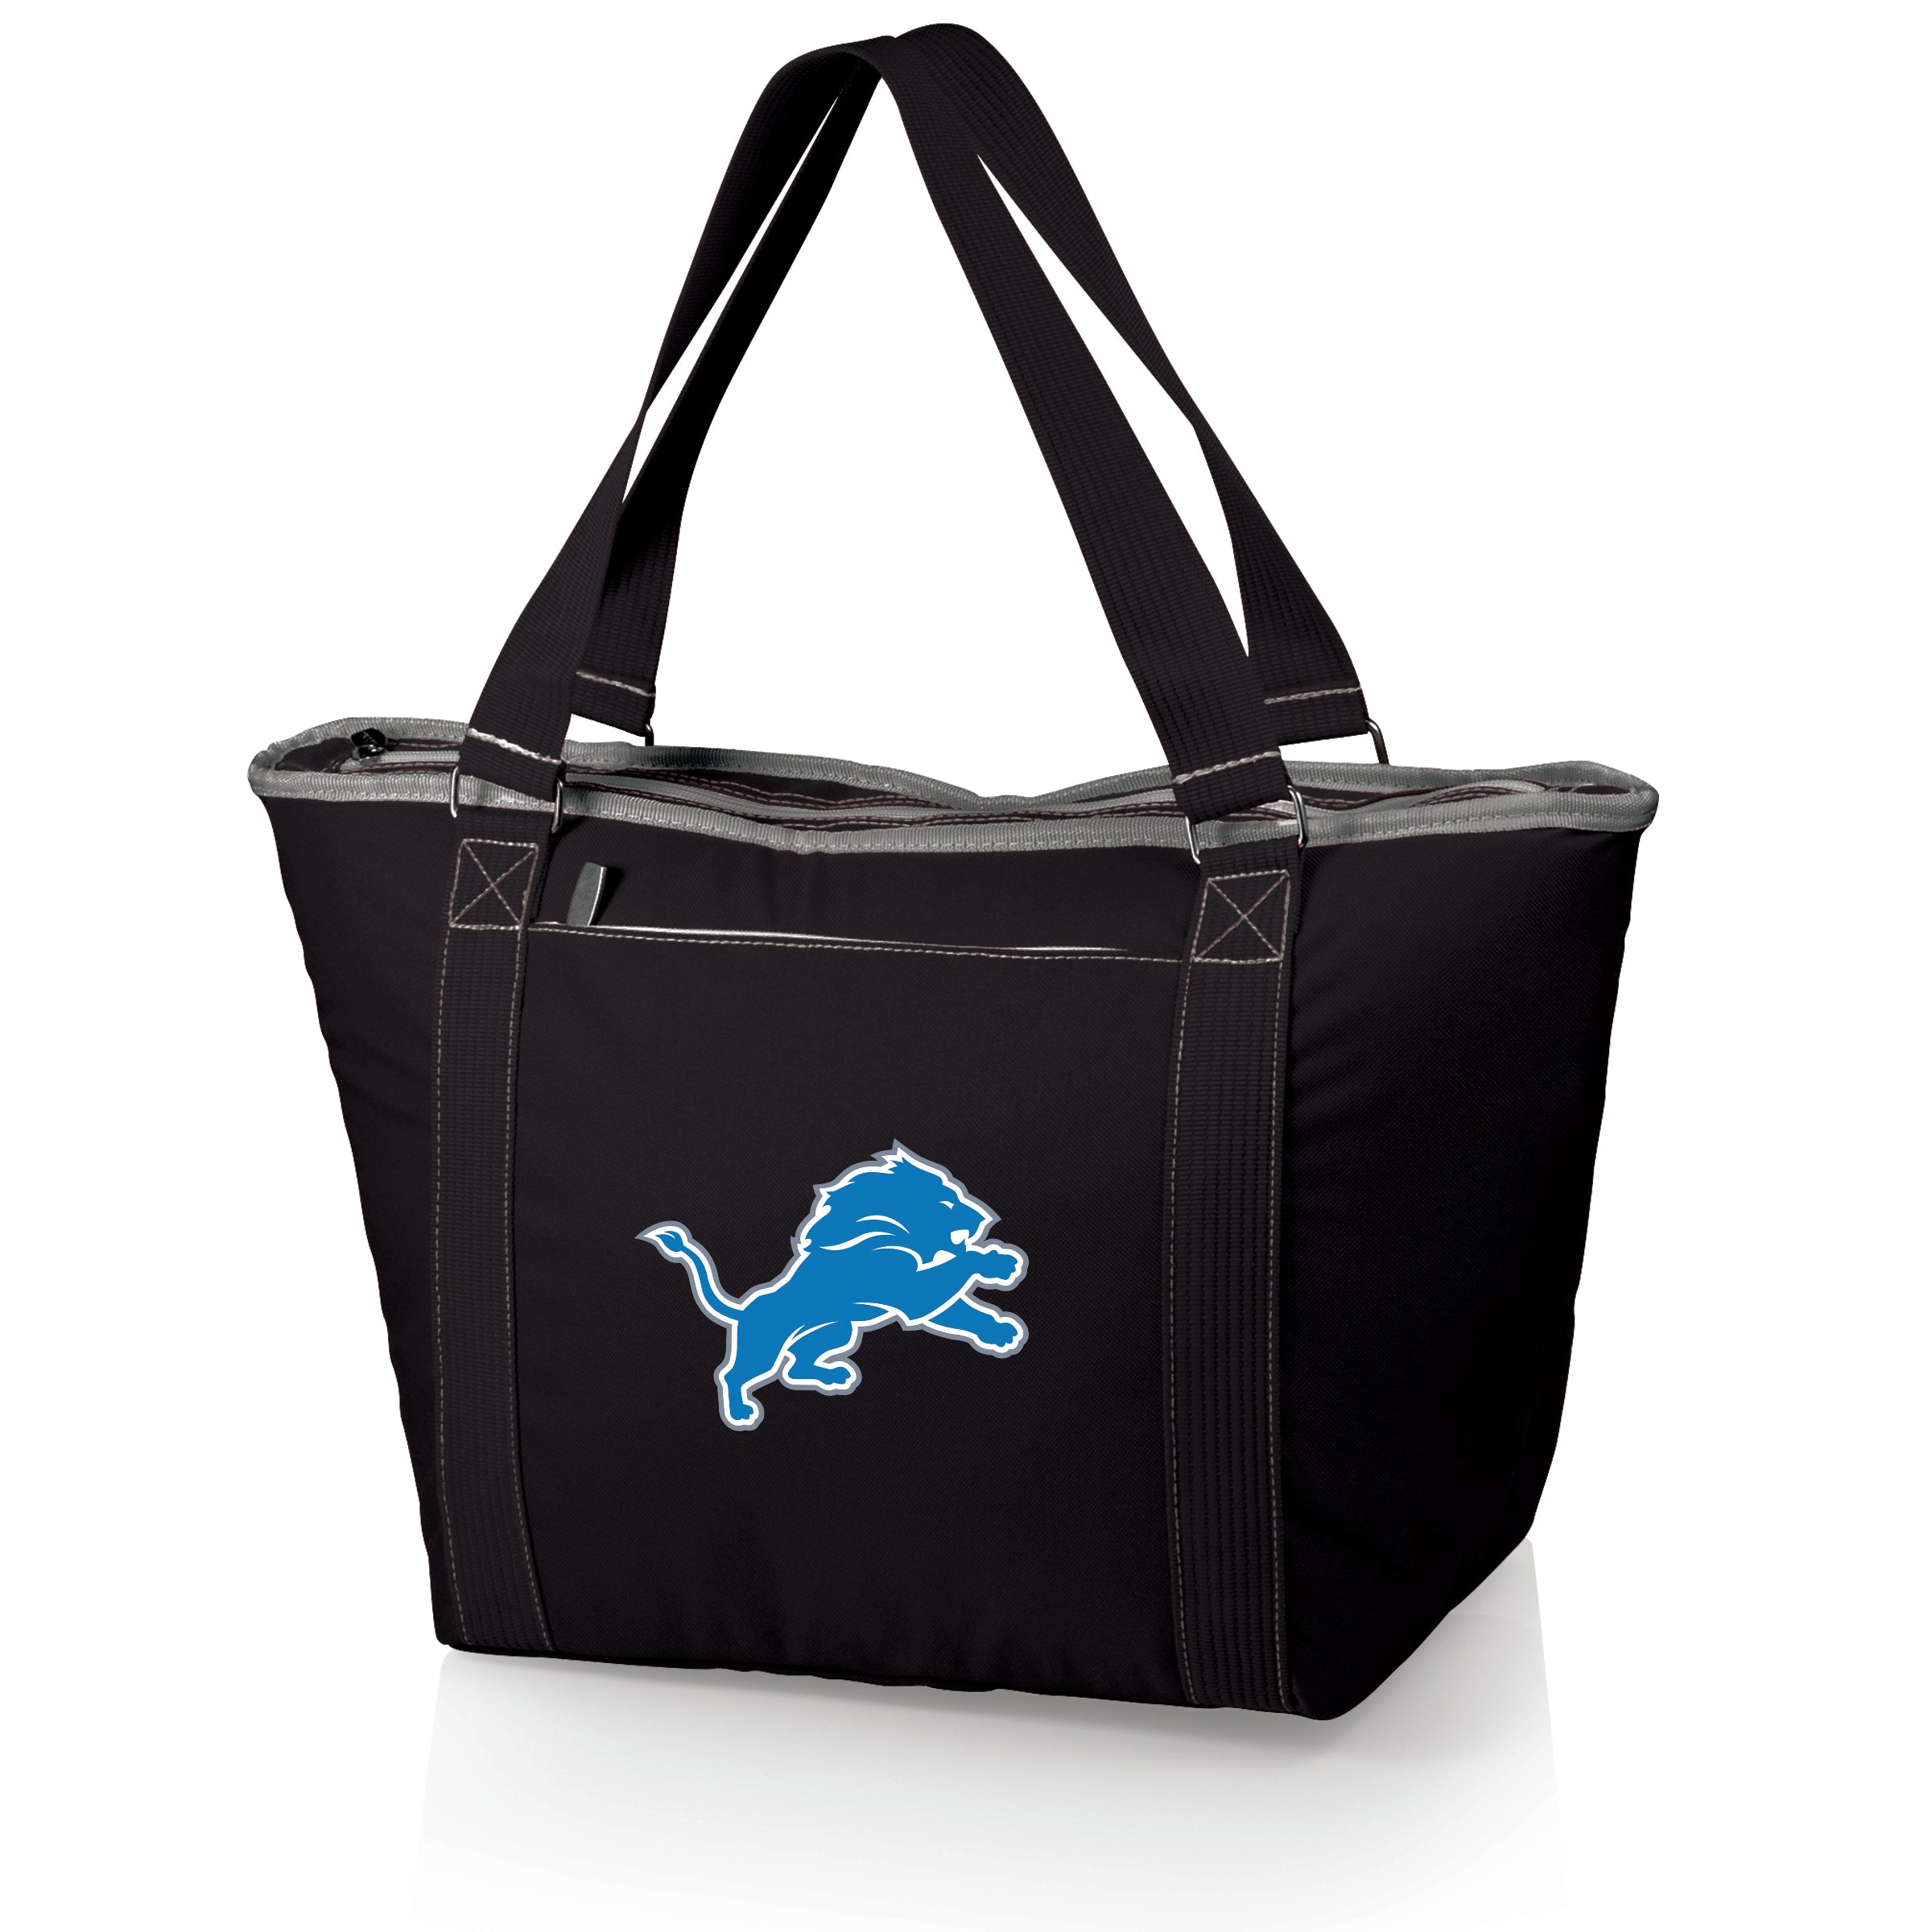 Detroit Lions - Topanga Cooler Tote Bag